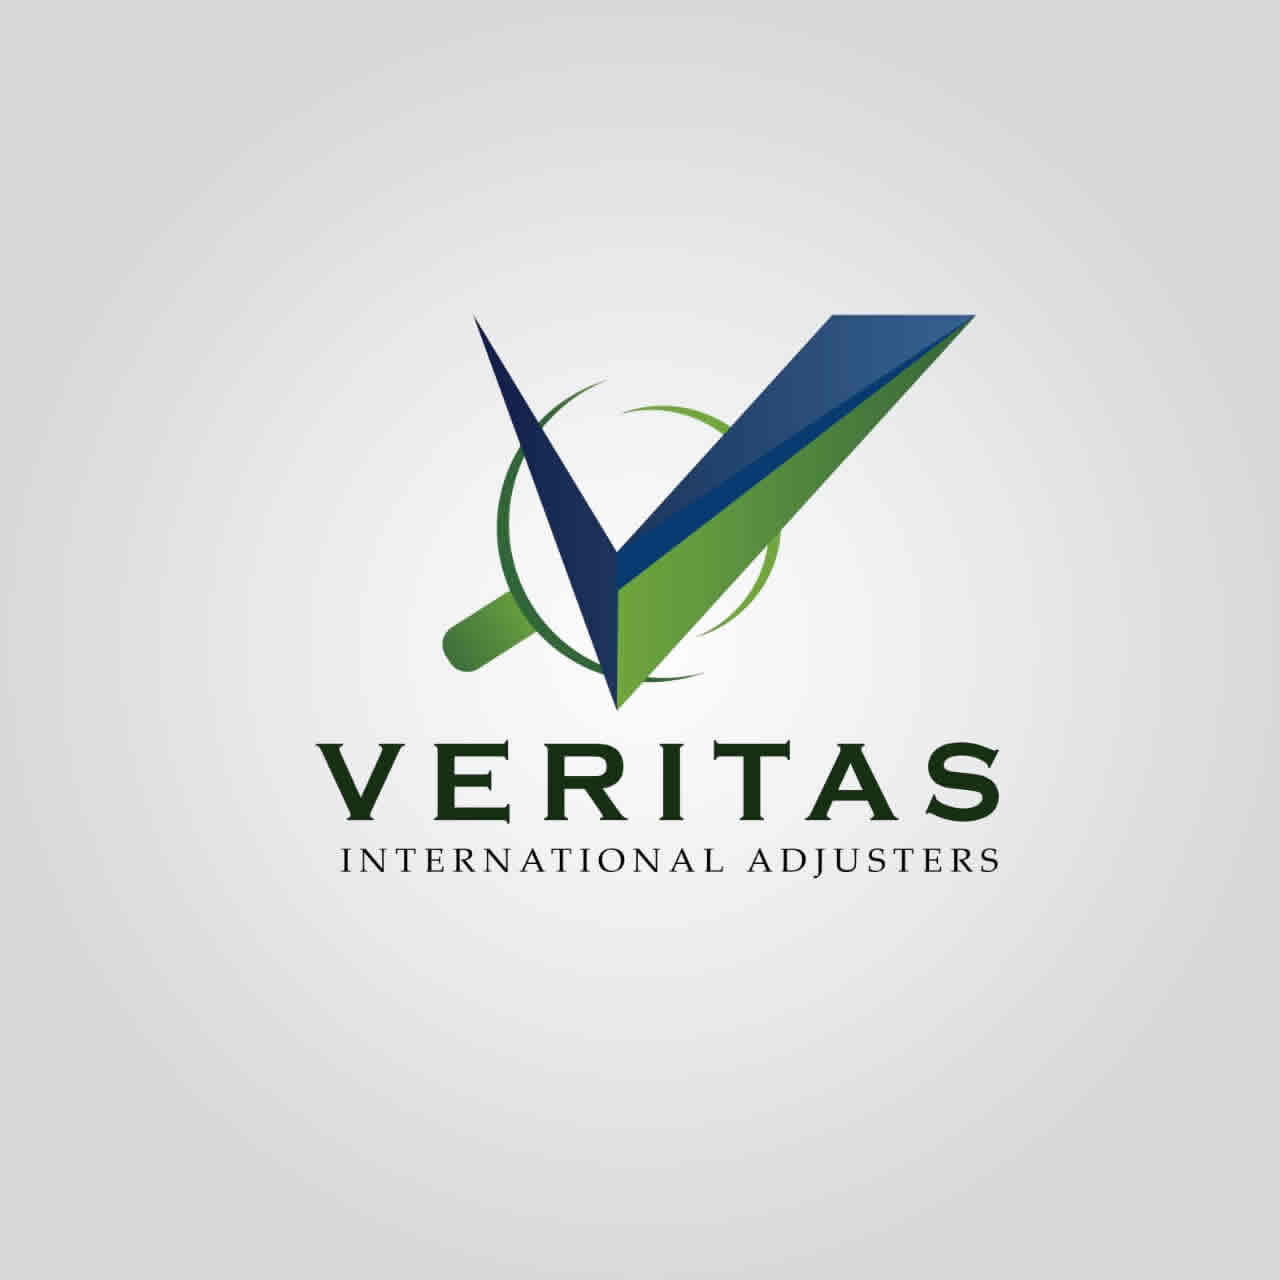 Veritas international adjusters